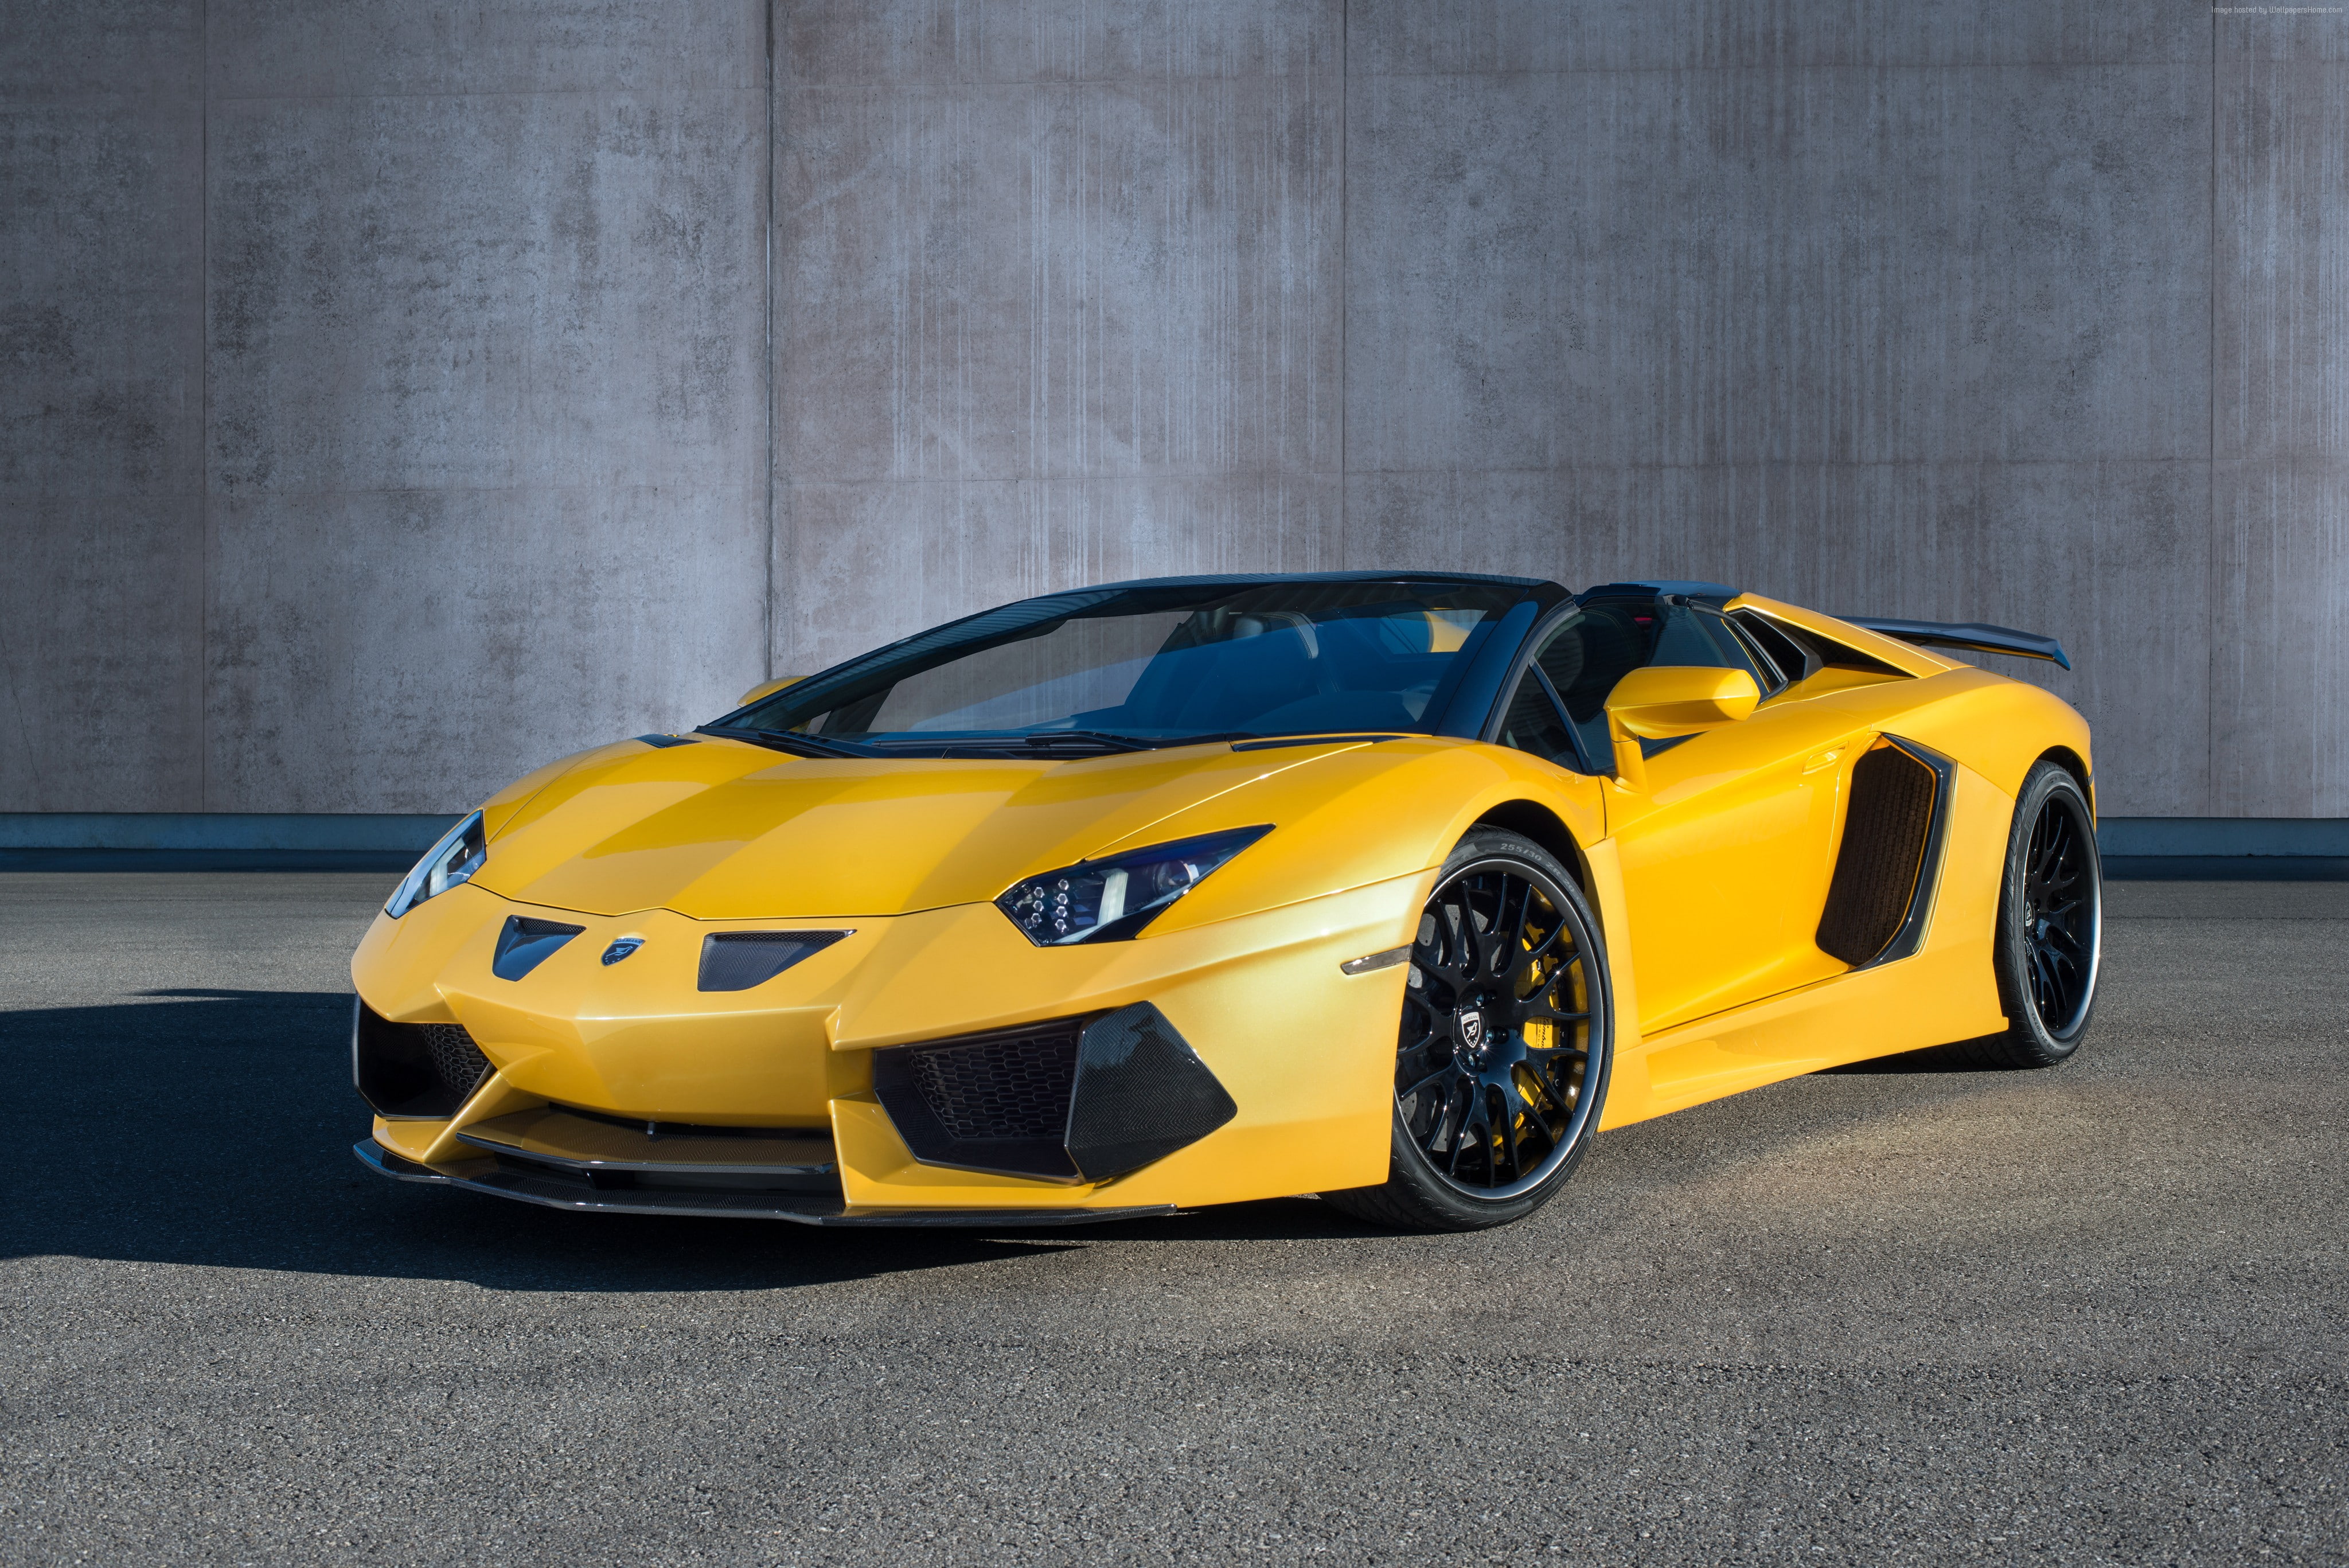 limited, special edition, yellow, roadster, Lamborghini Aventador